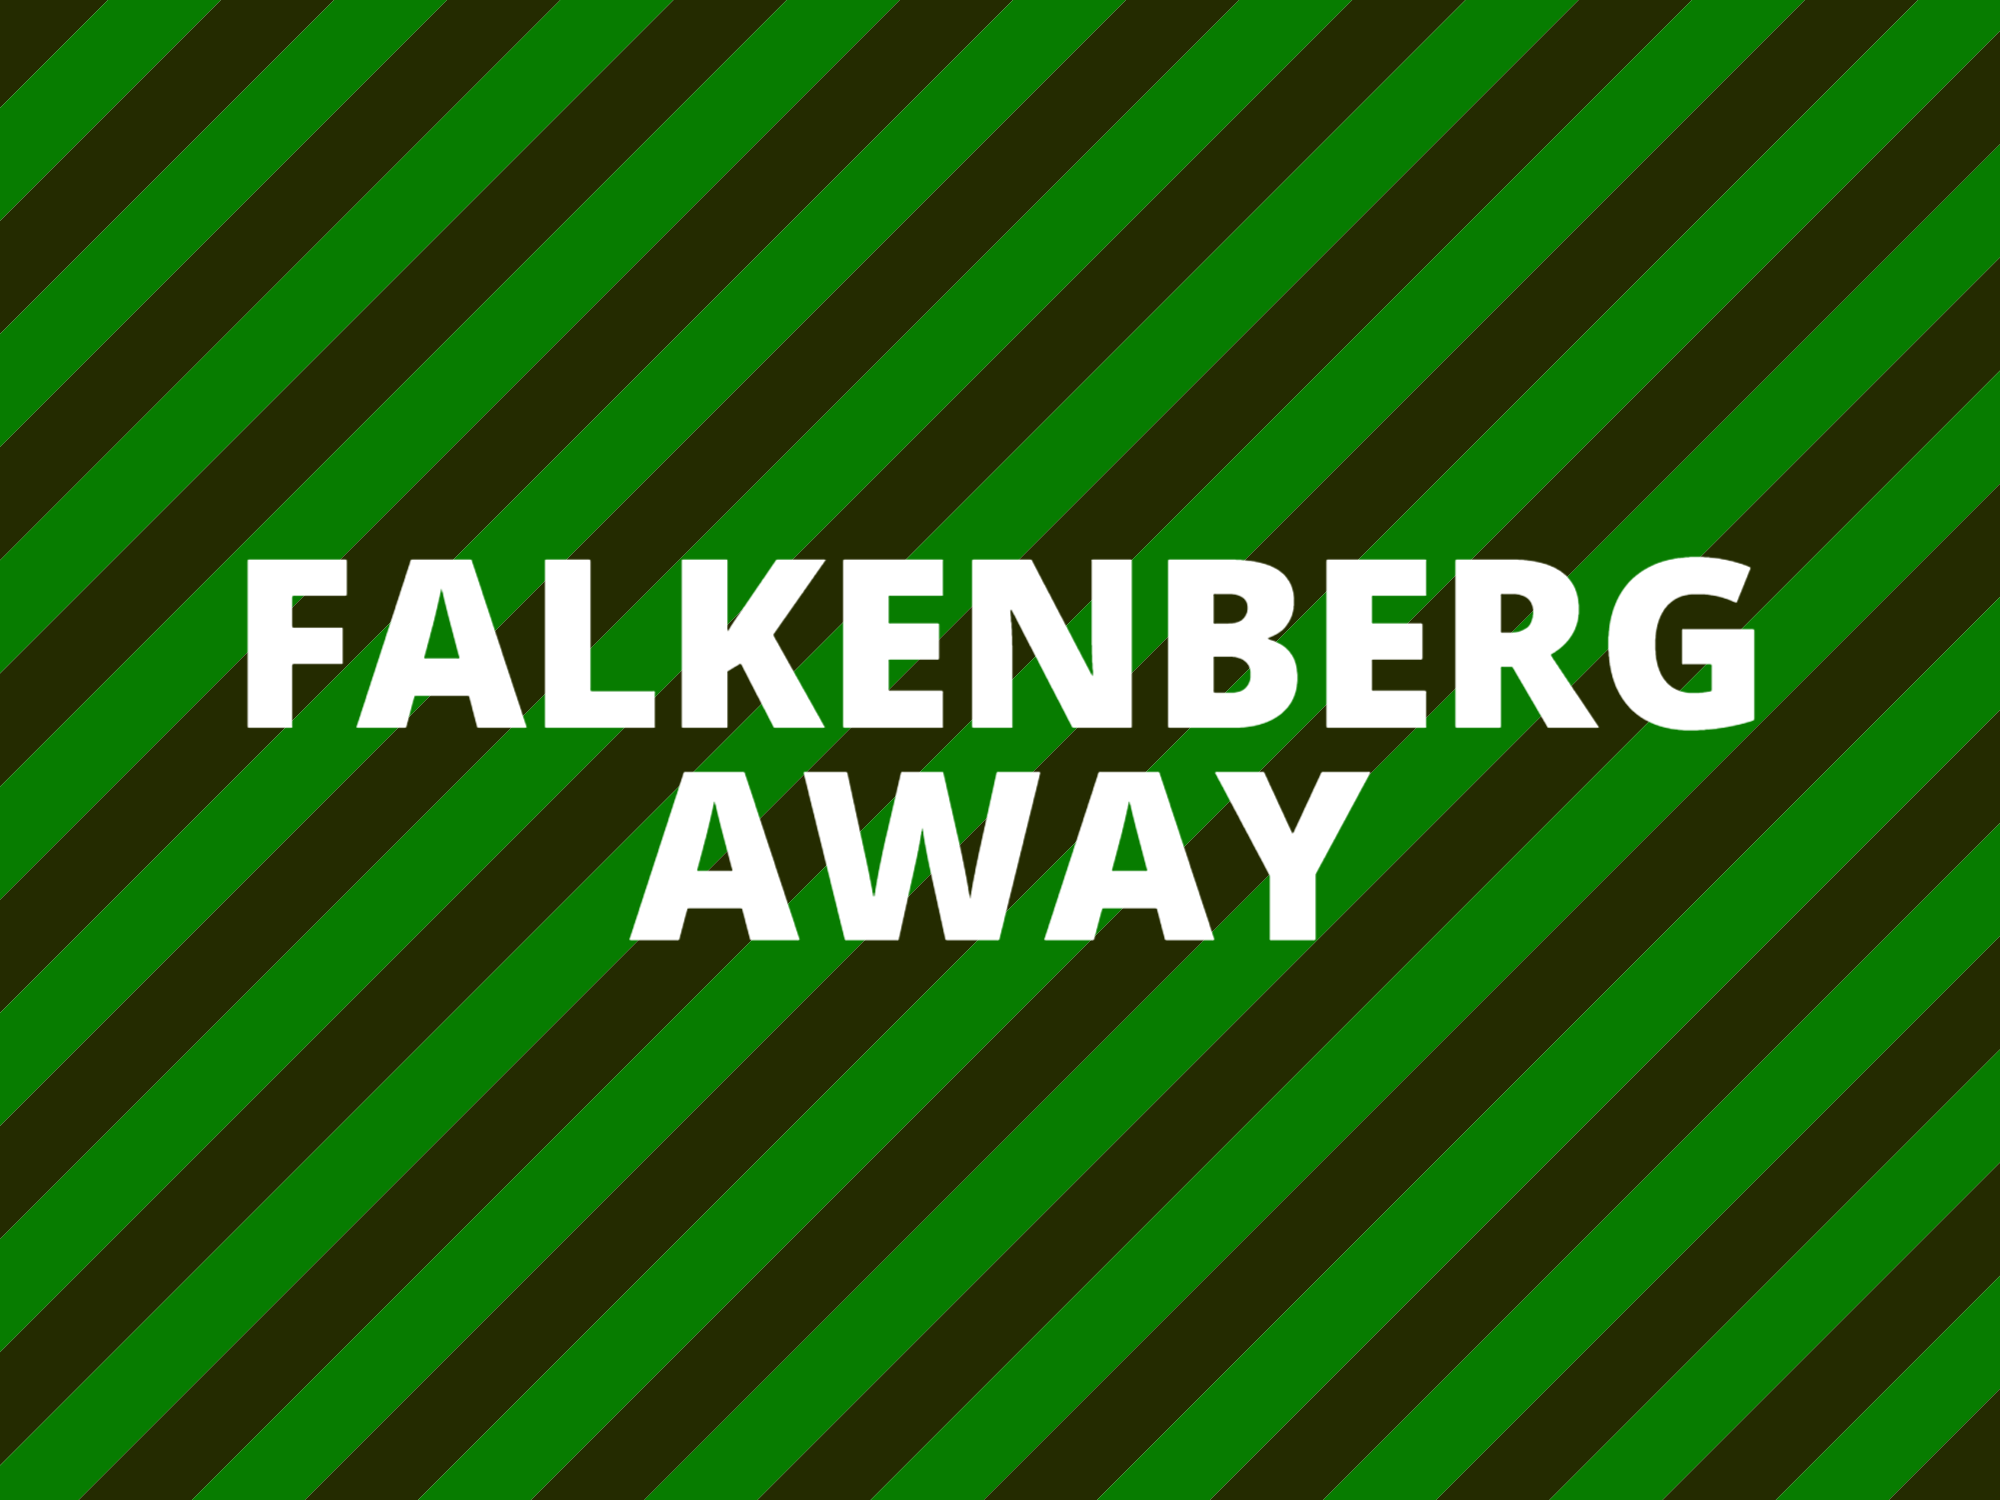 Falkenberg away